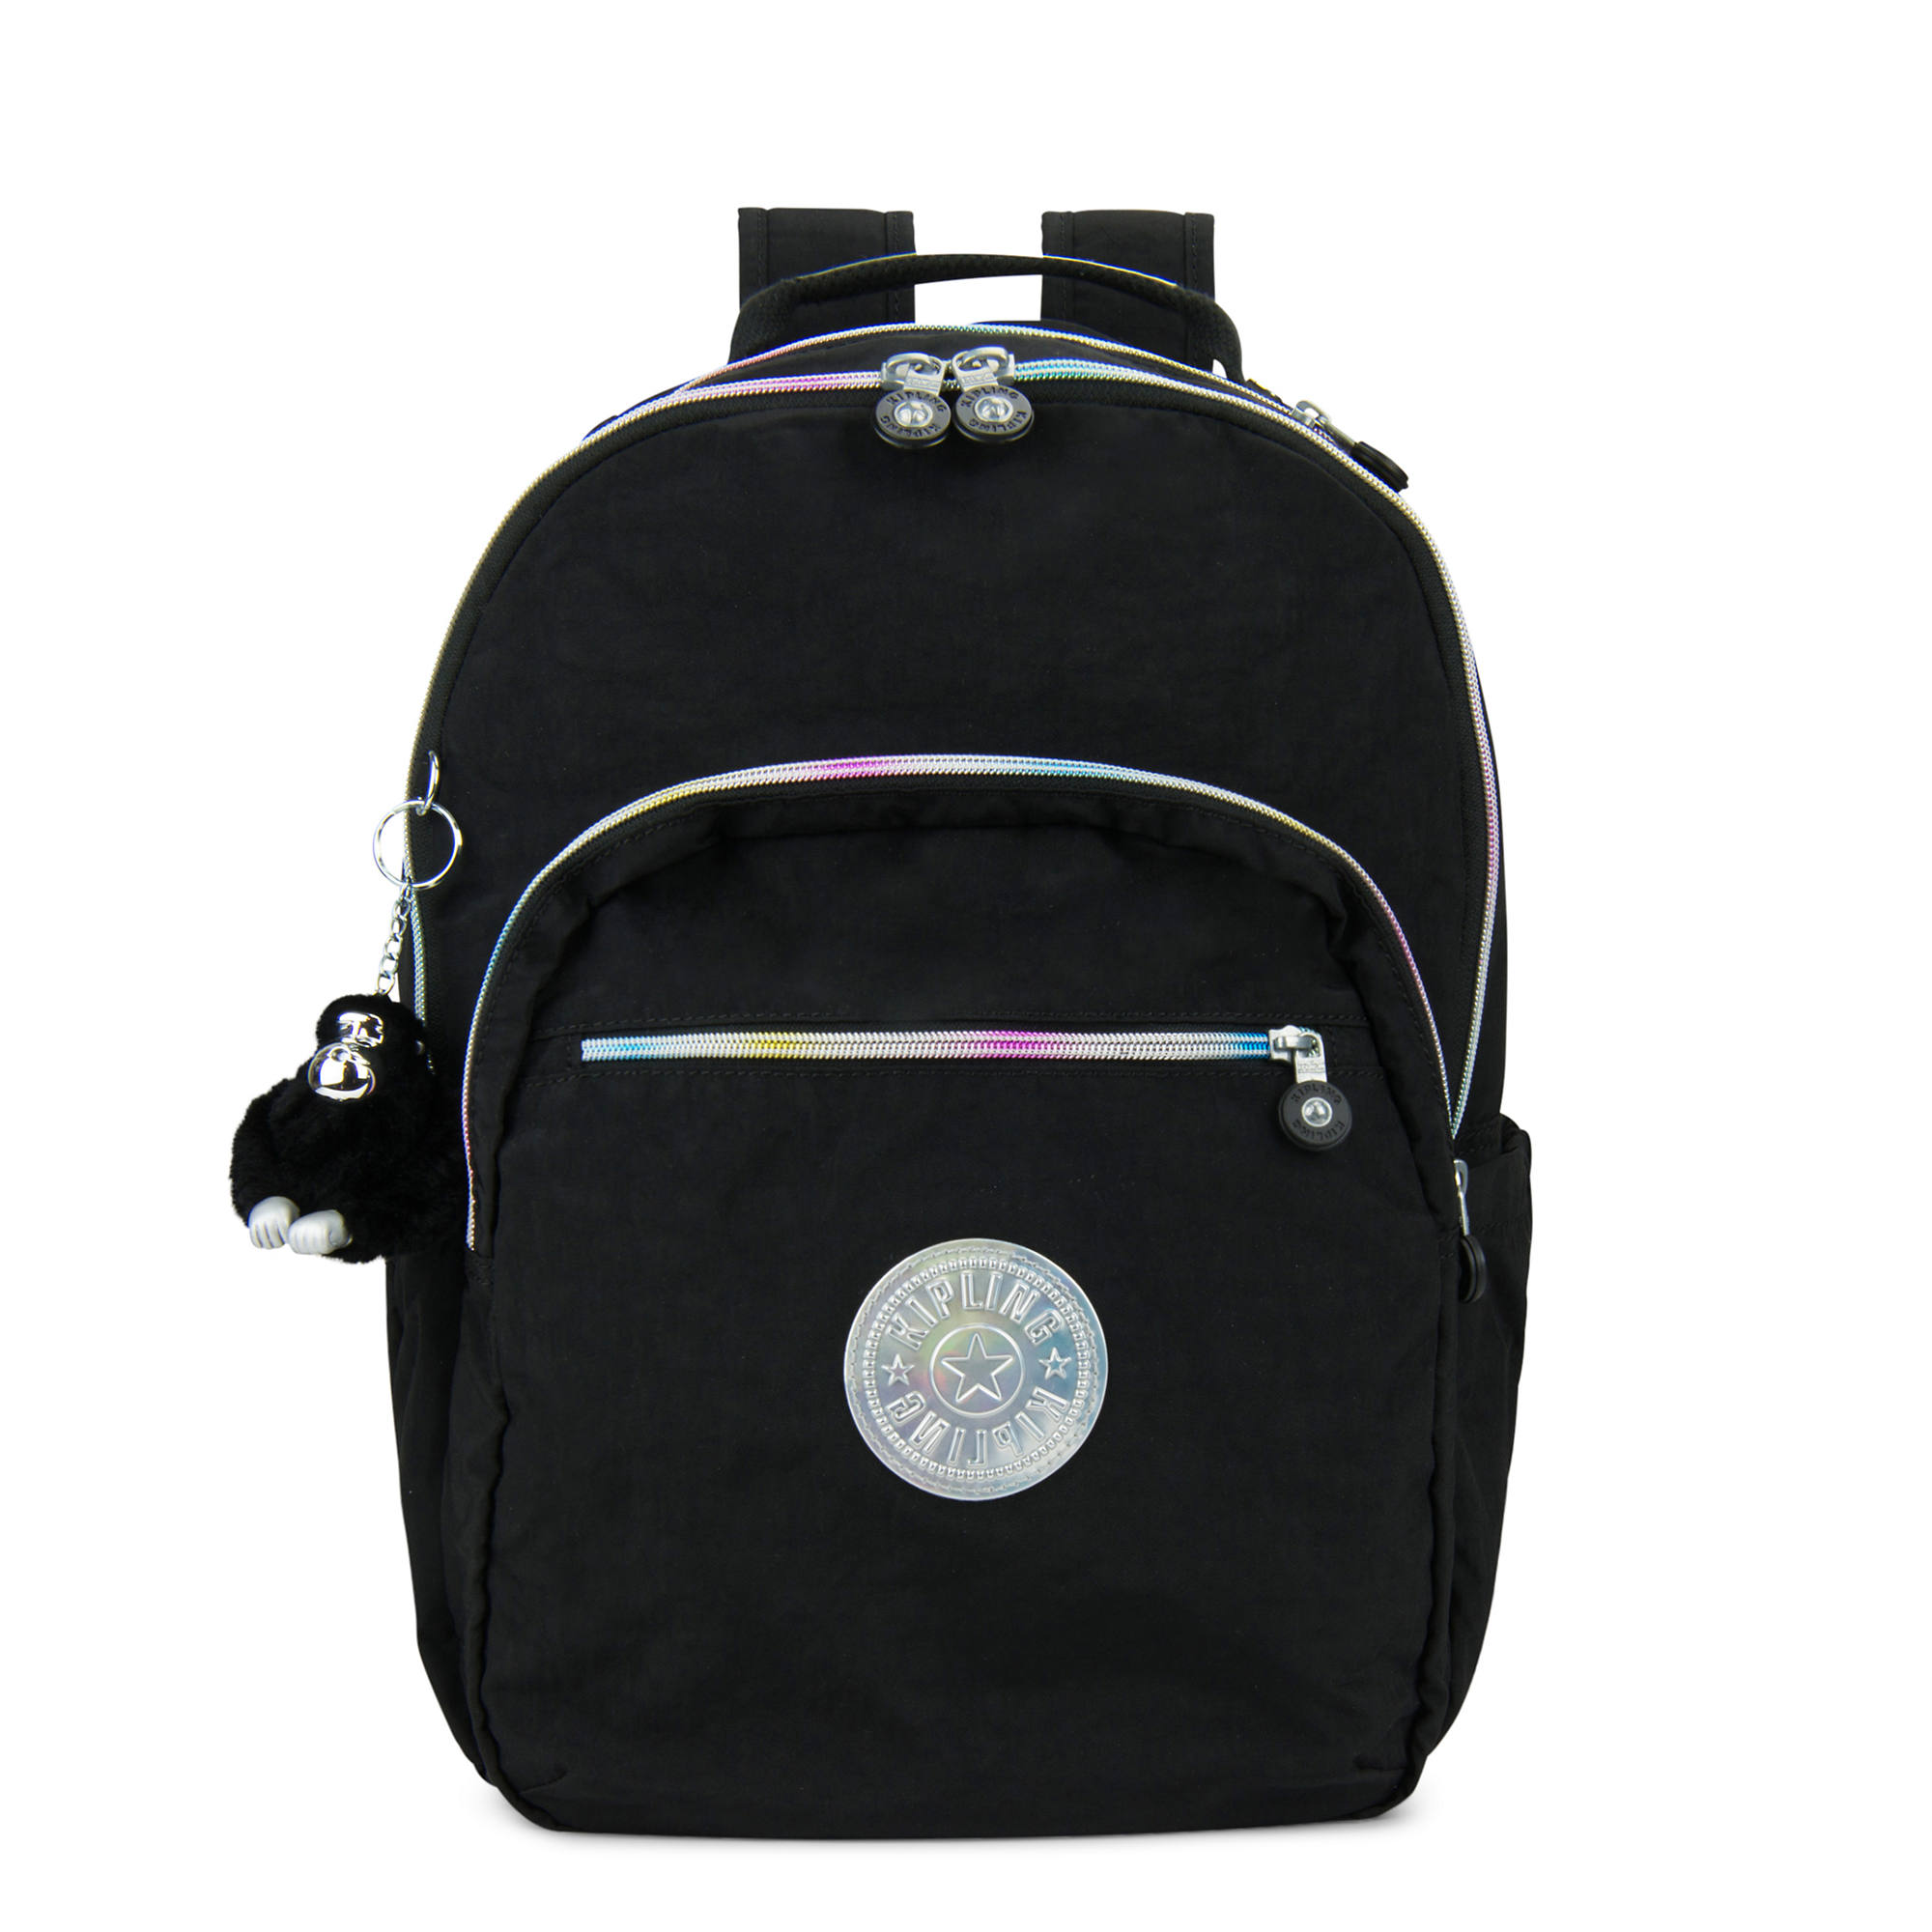 Kipling SEOUL S Small Backpack - Crazy Spots RRP £83 | eBay